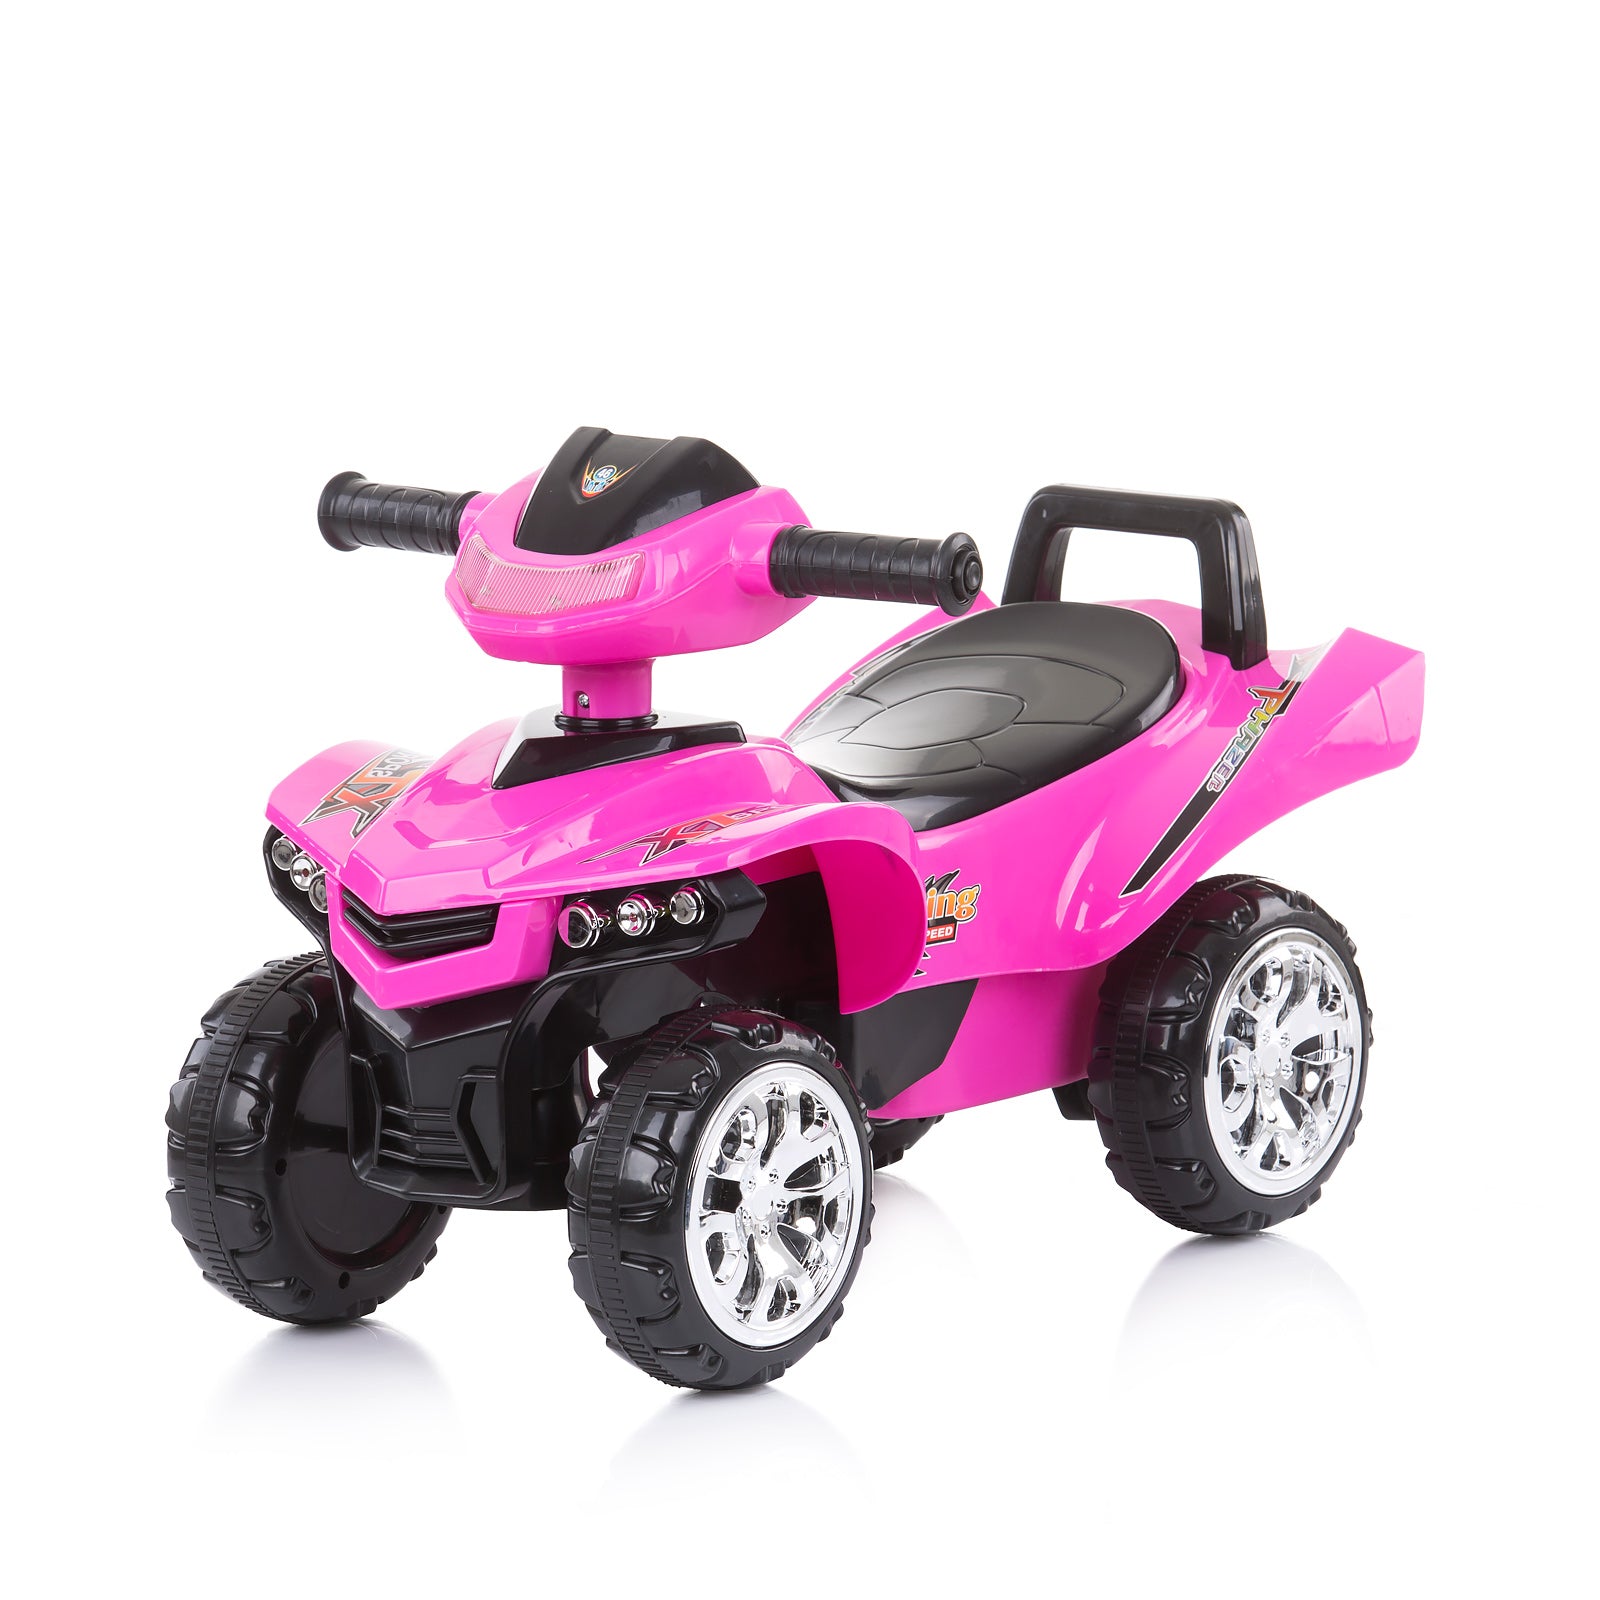 Chipolino dječja guralica ATV - Pink